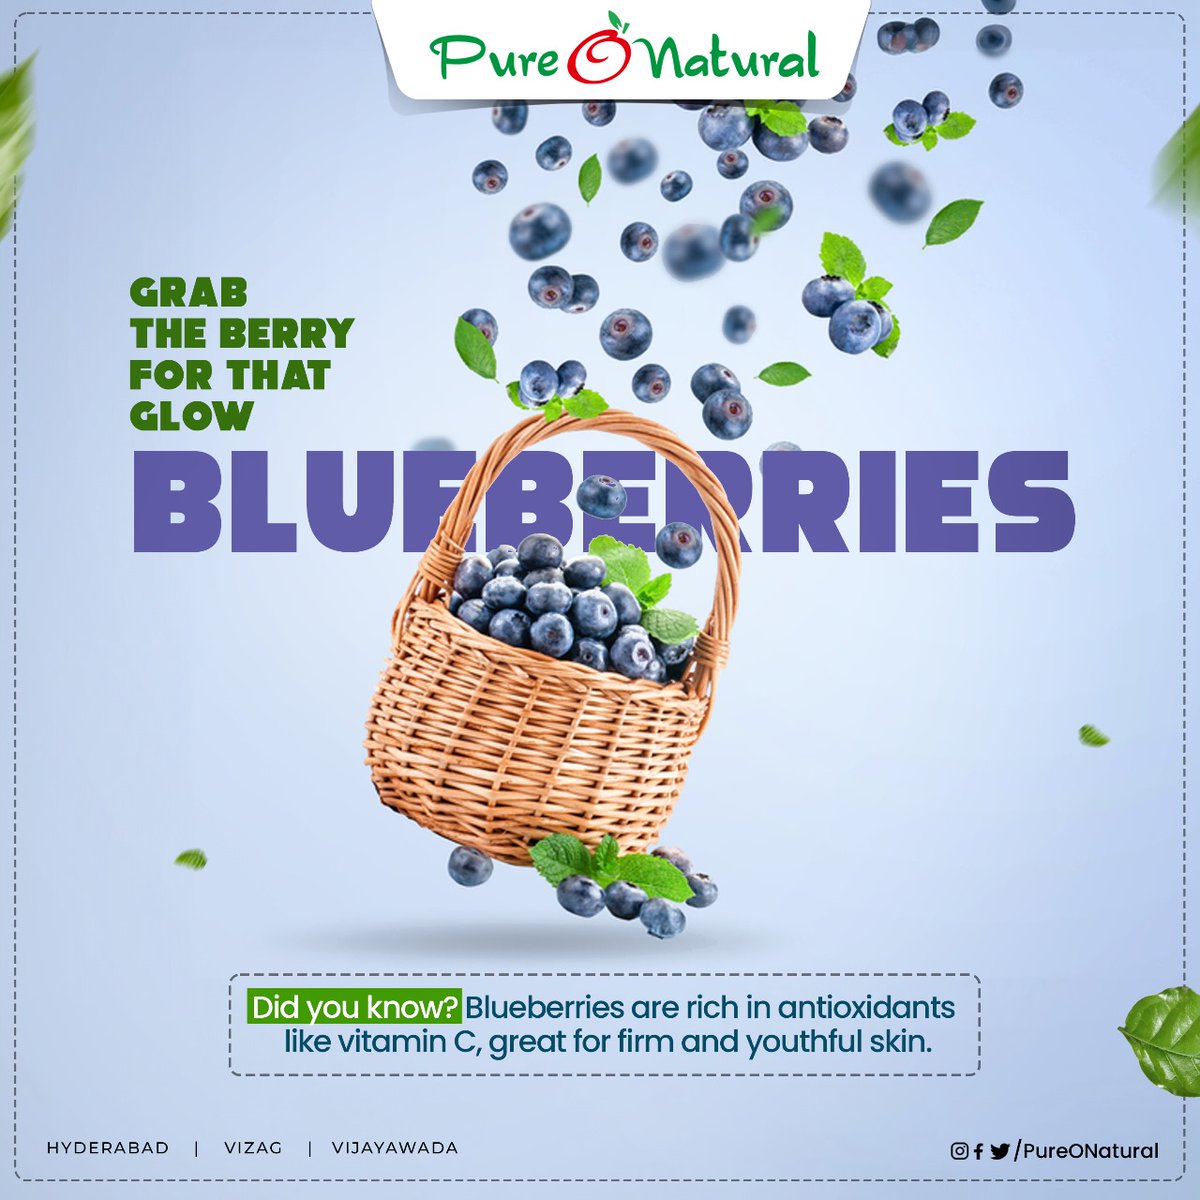 Grab the Berry! 🫐

#Blueberries #FarmFresh #FreshVegetables #FreshFruits